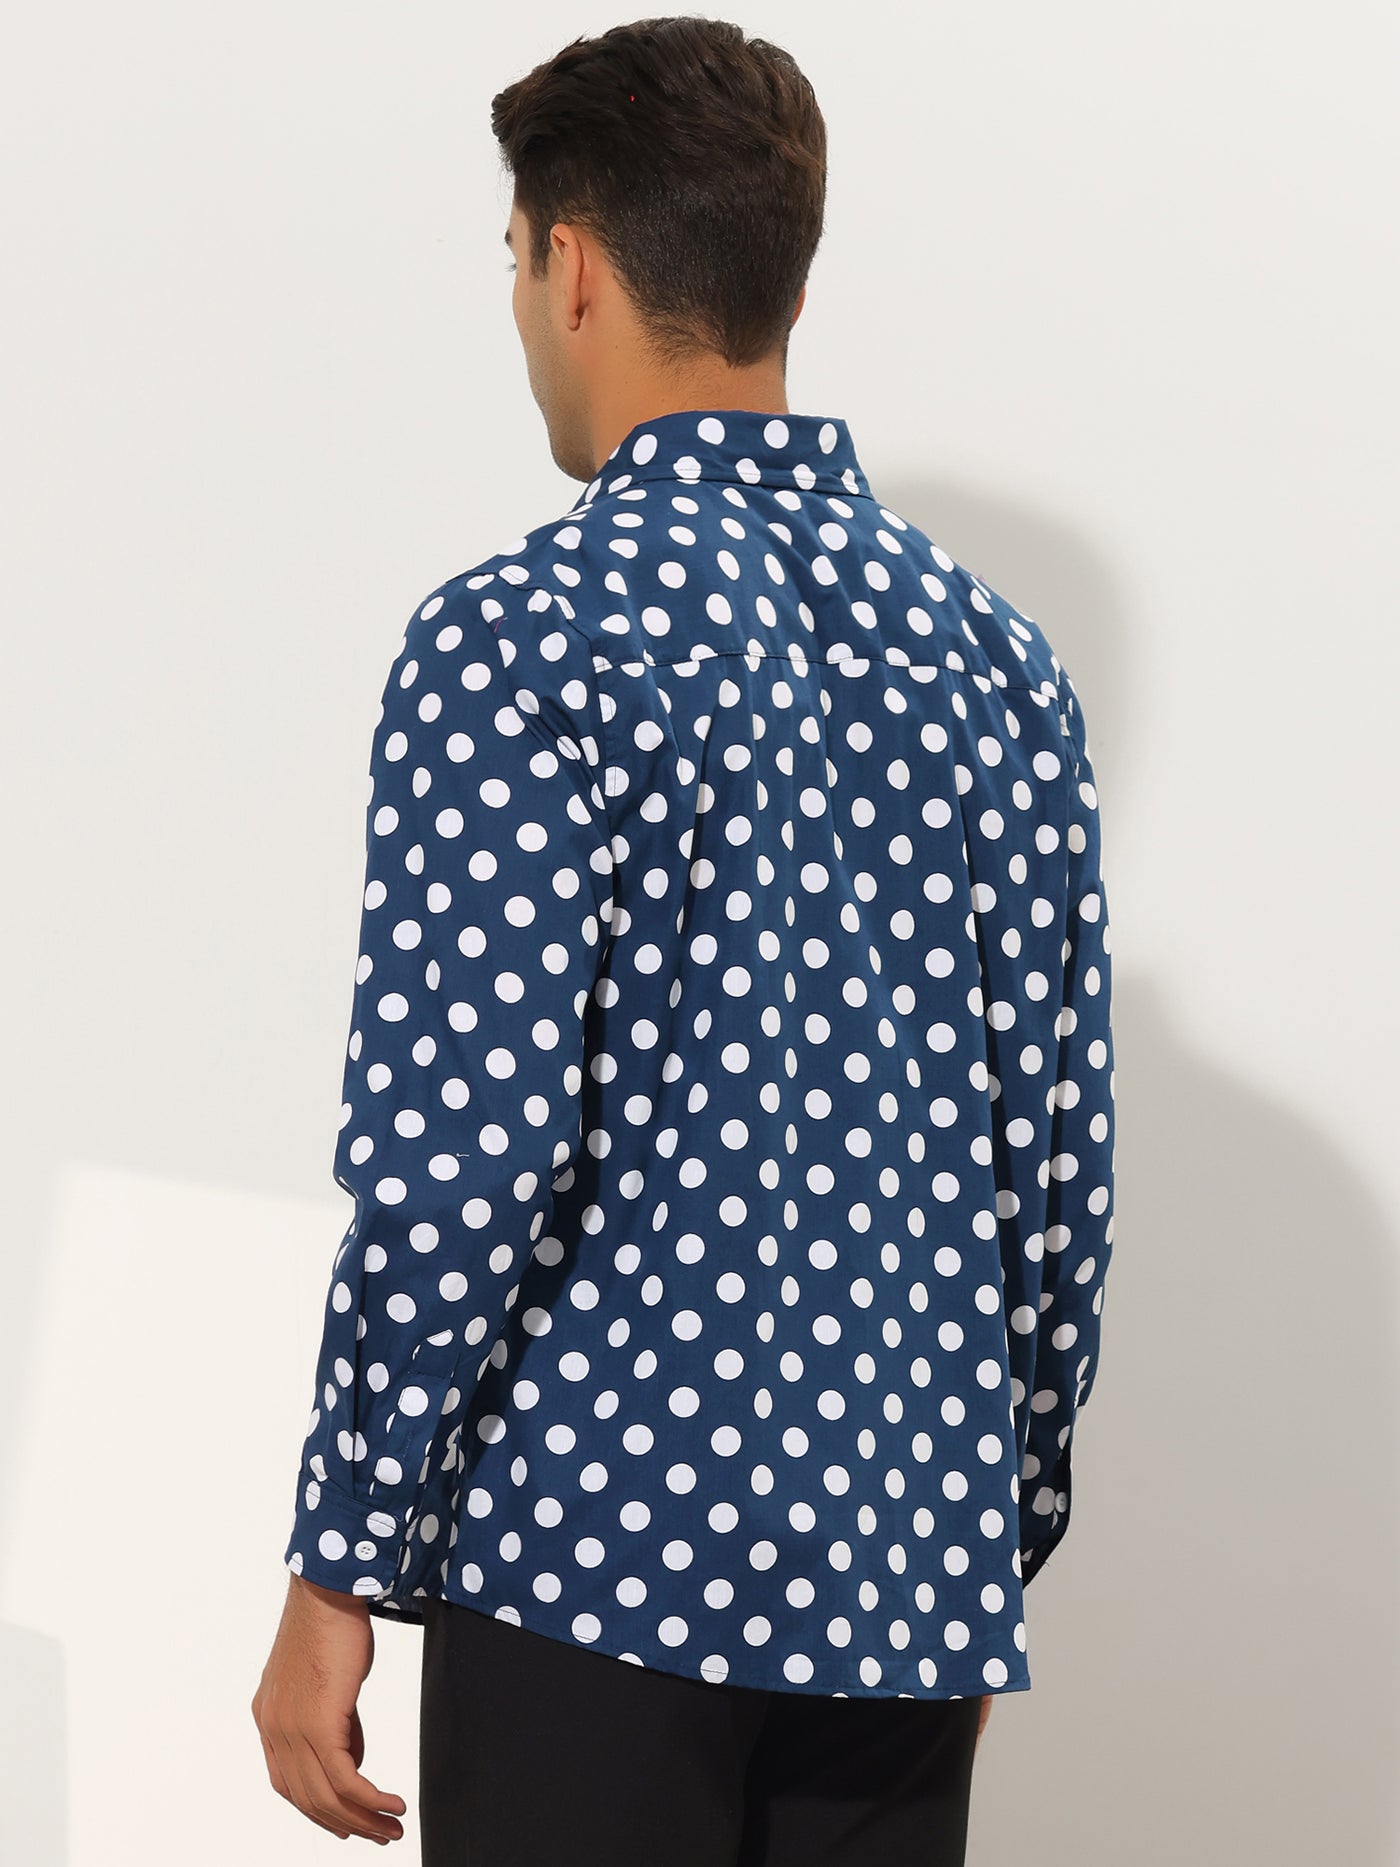 Bublédon Polka Dots Dress Shirt for Men's Button Down Long Sleeve Casual Business Shirts